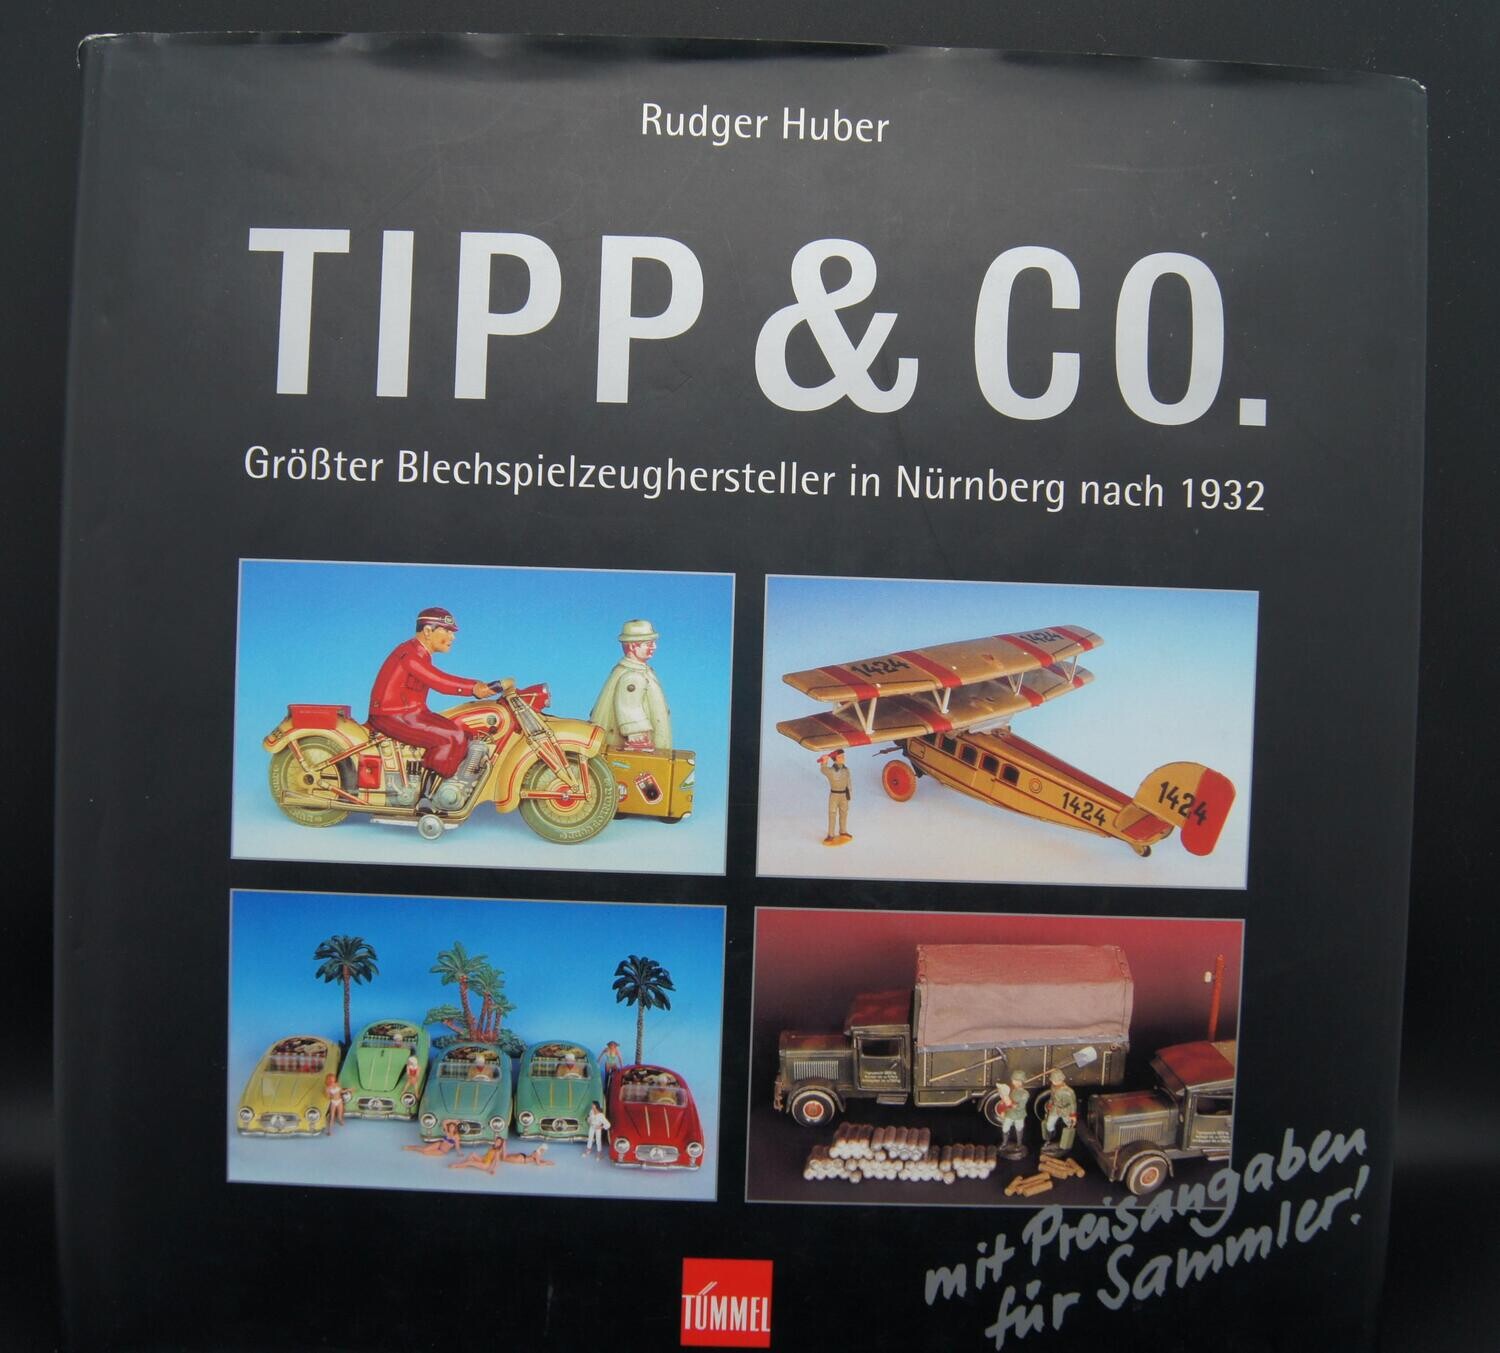 Tipp & Co, Größter Blechspielzeughersteller in Nürnberg nach 1932